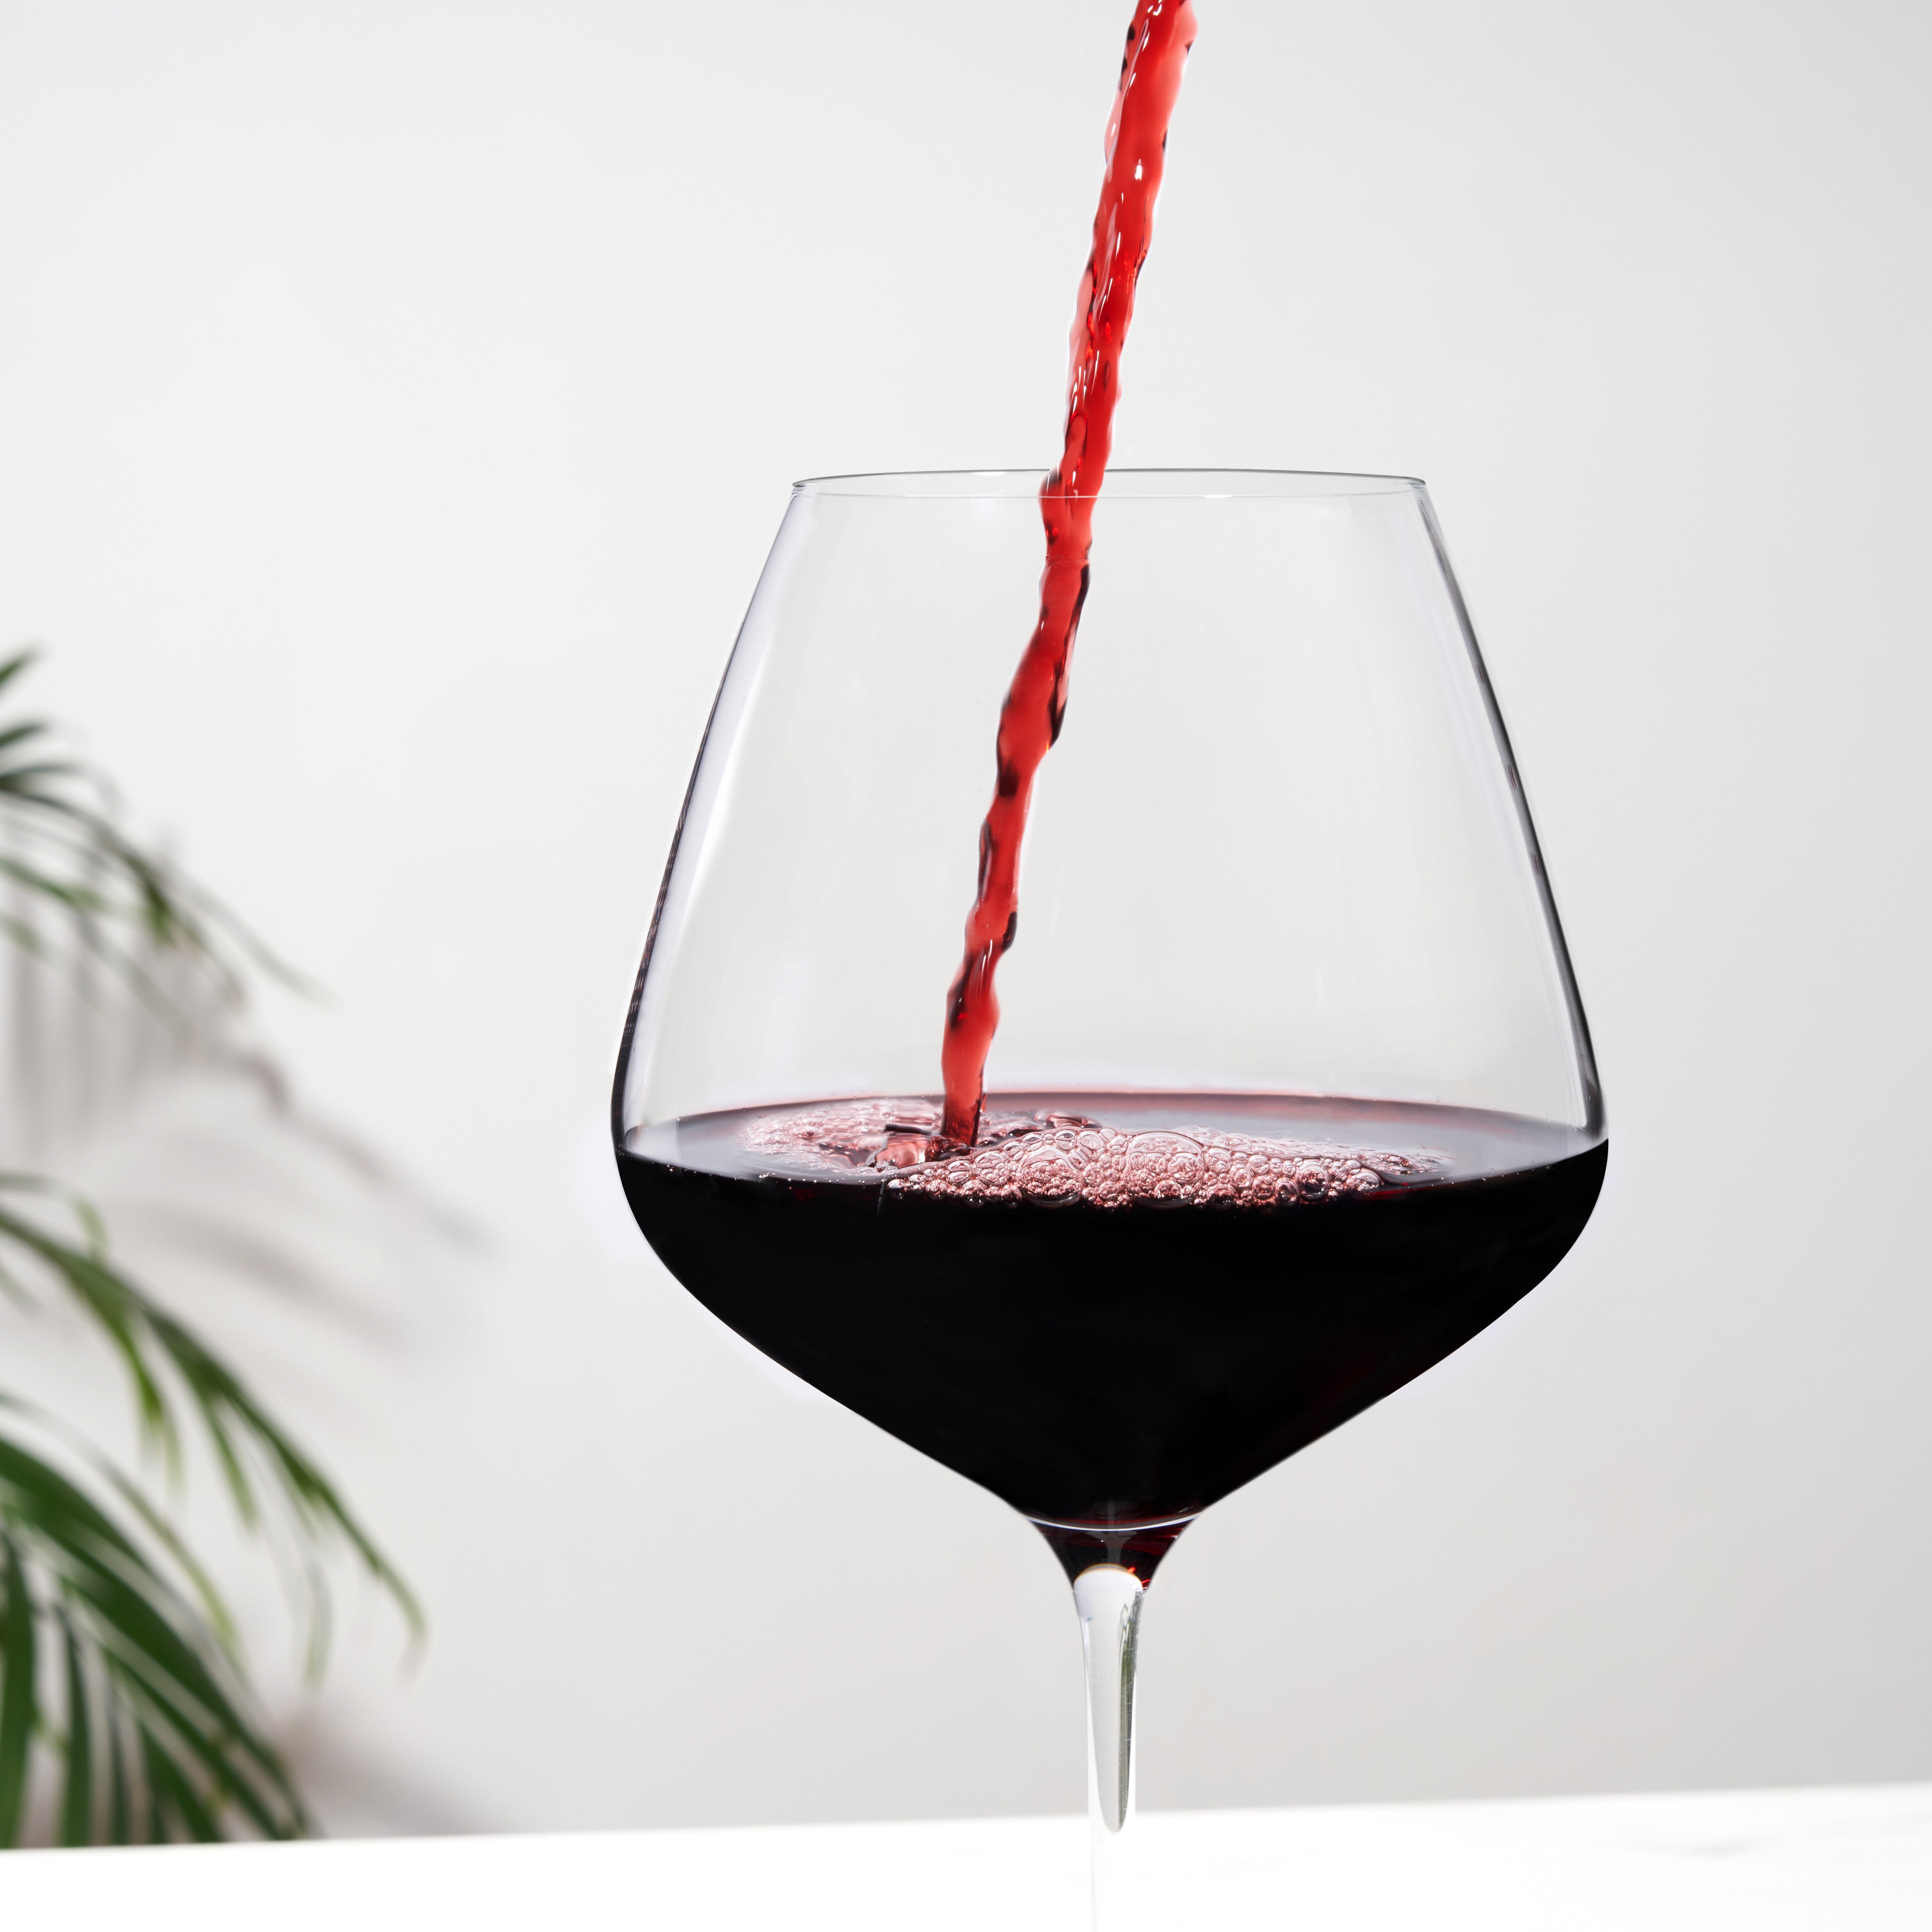 ACHEER 24 Oz Crystal Burgundy Red Wine Glasses Set of 2, Hand Blown Italian  Style, Long Stem, Large,…See more ACHEER 24 Oz Crystal Burgundy Red Wine